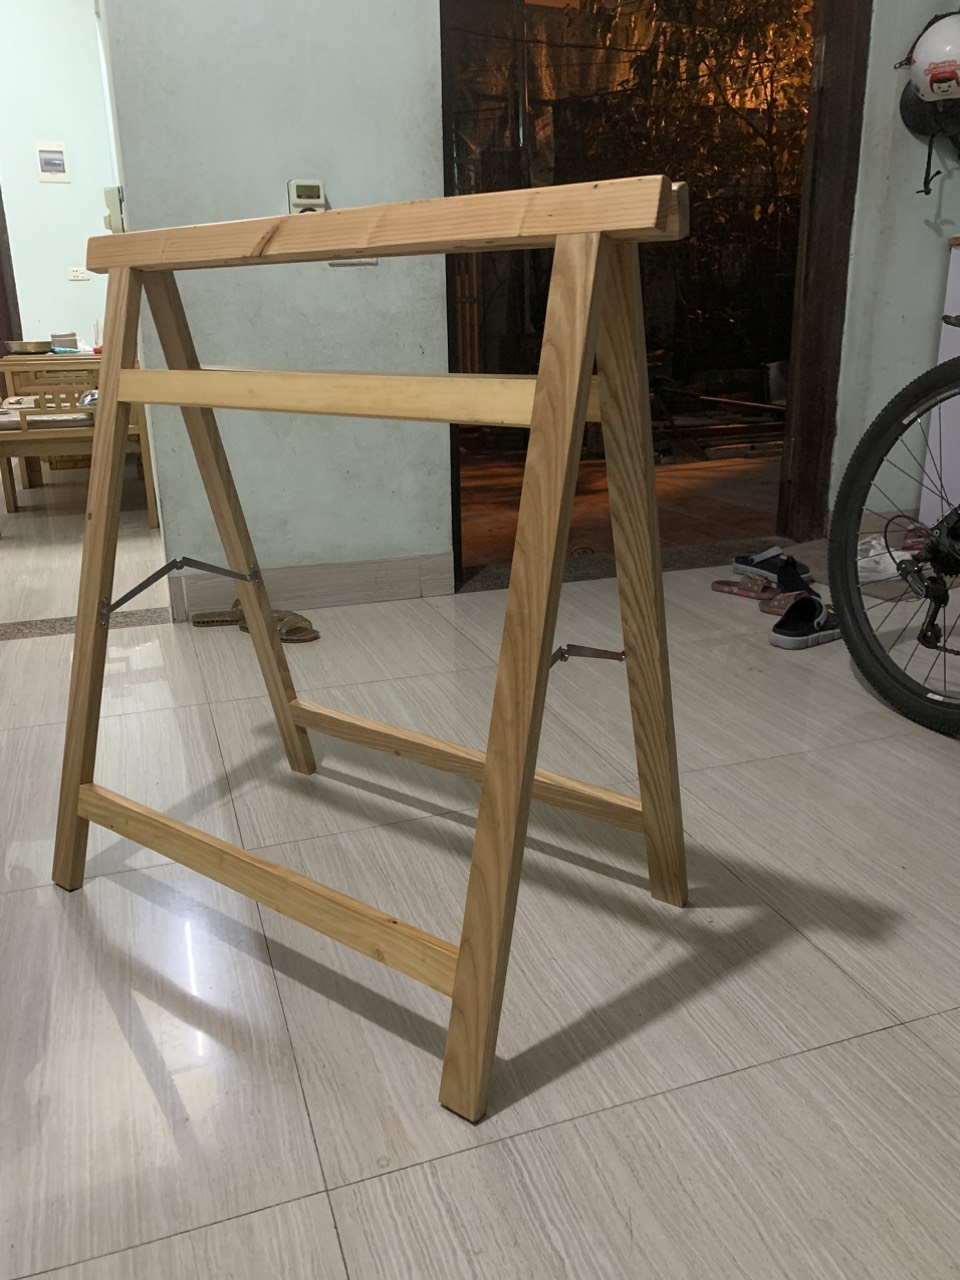 Customized wooden shelf producing